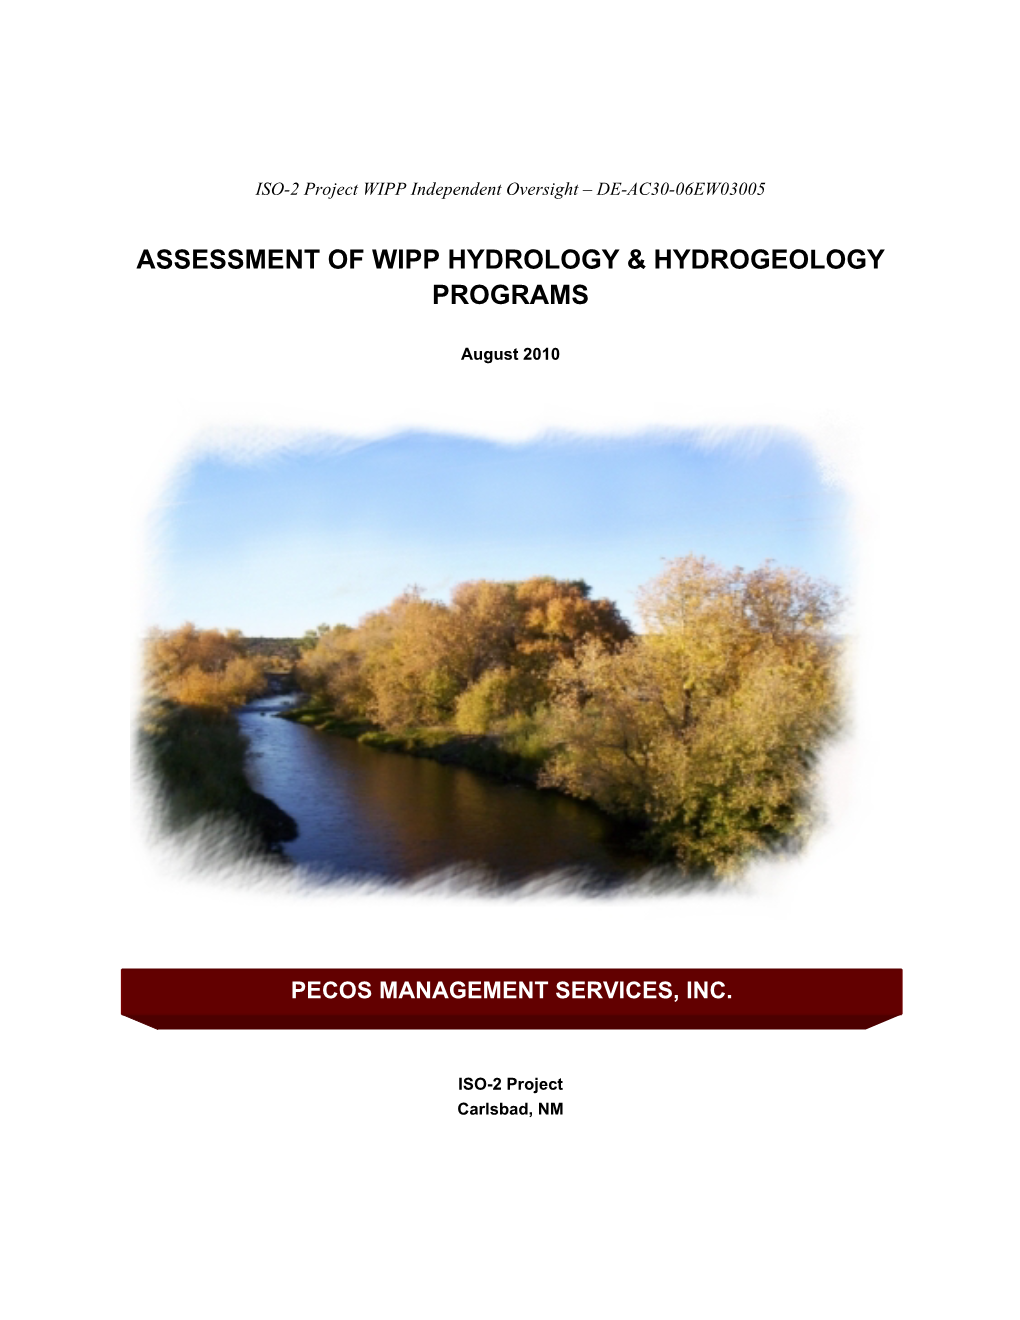 Assessment of WIPP Hydrology & Hydrogeology Programs (PDF)